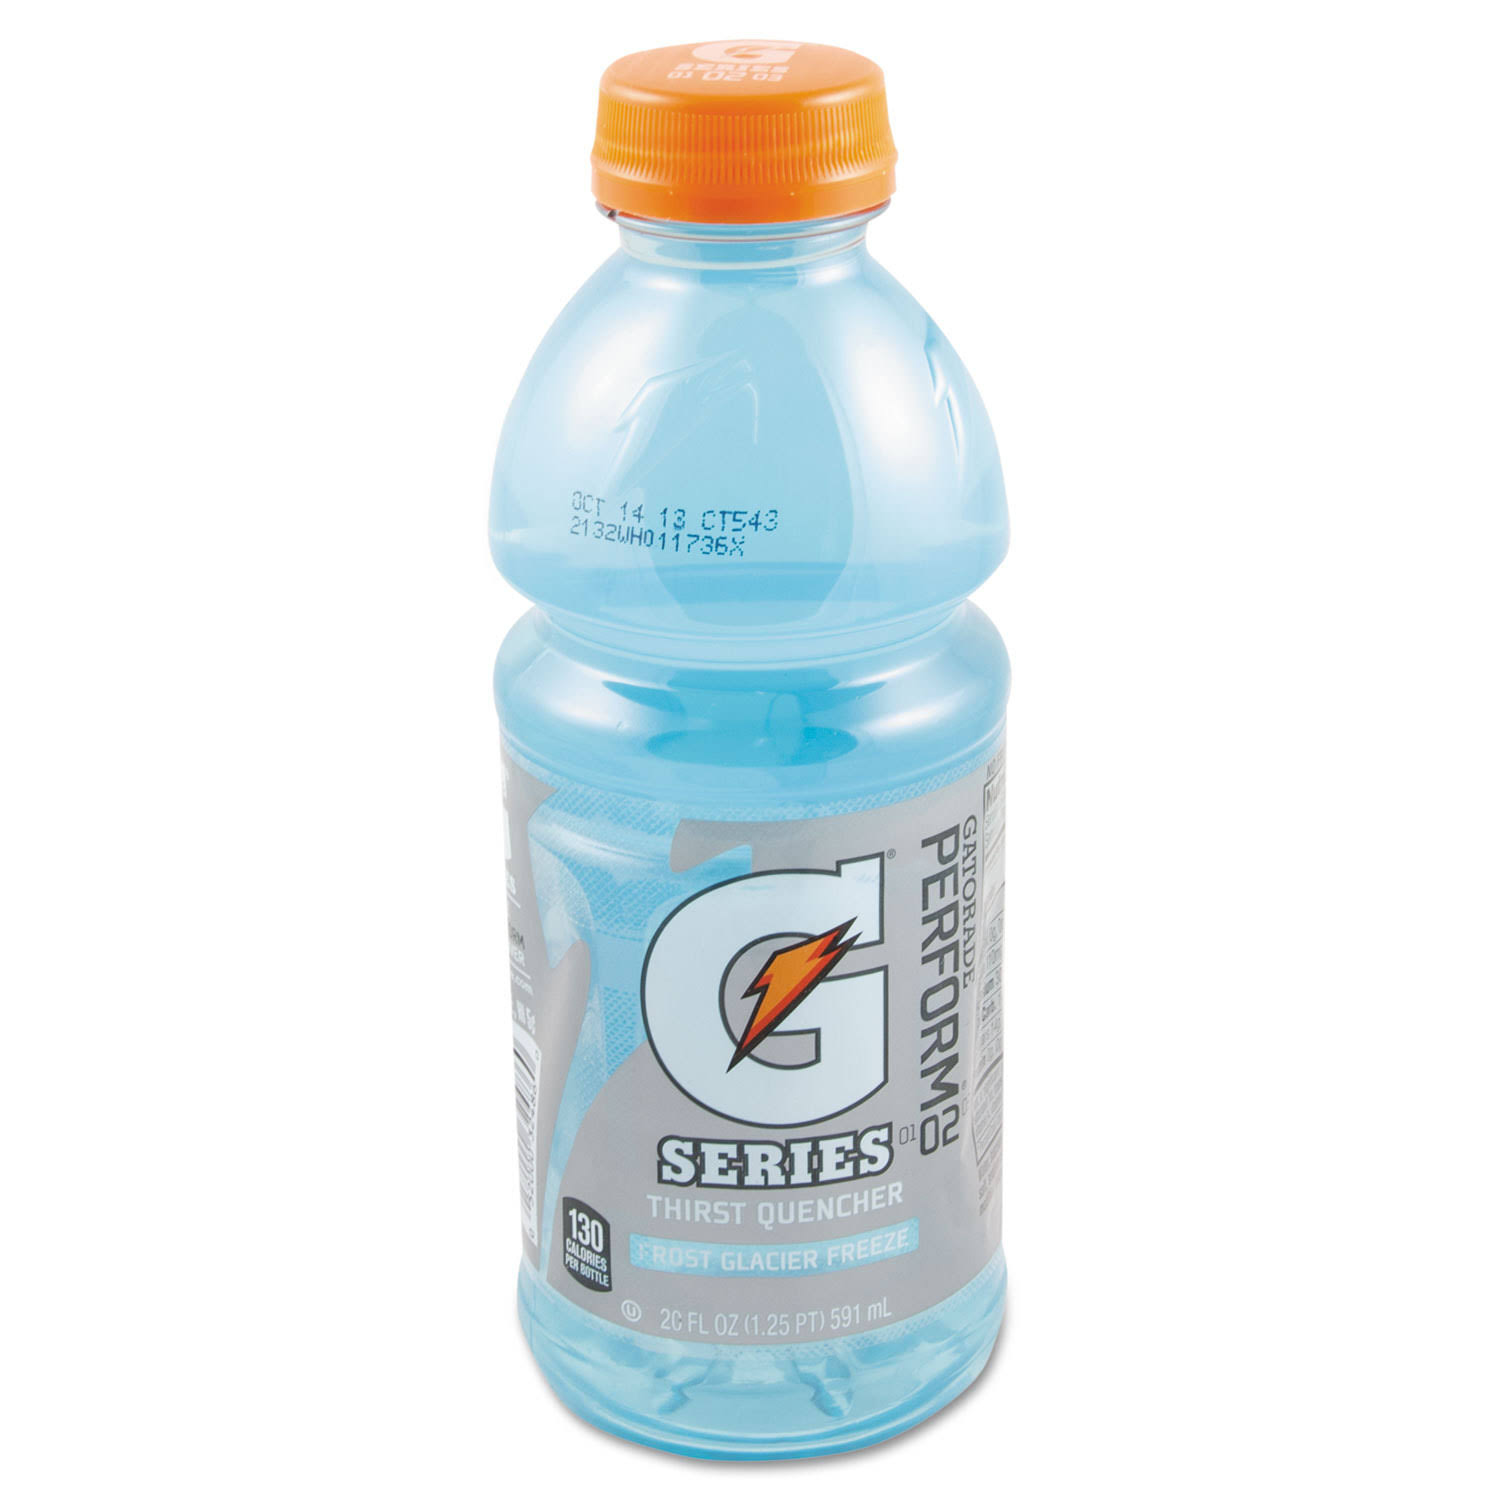 Pepsico - G-Series Perform 02 Thirst Quencher, Glacier Freeze, 20 oz B